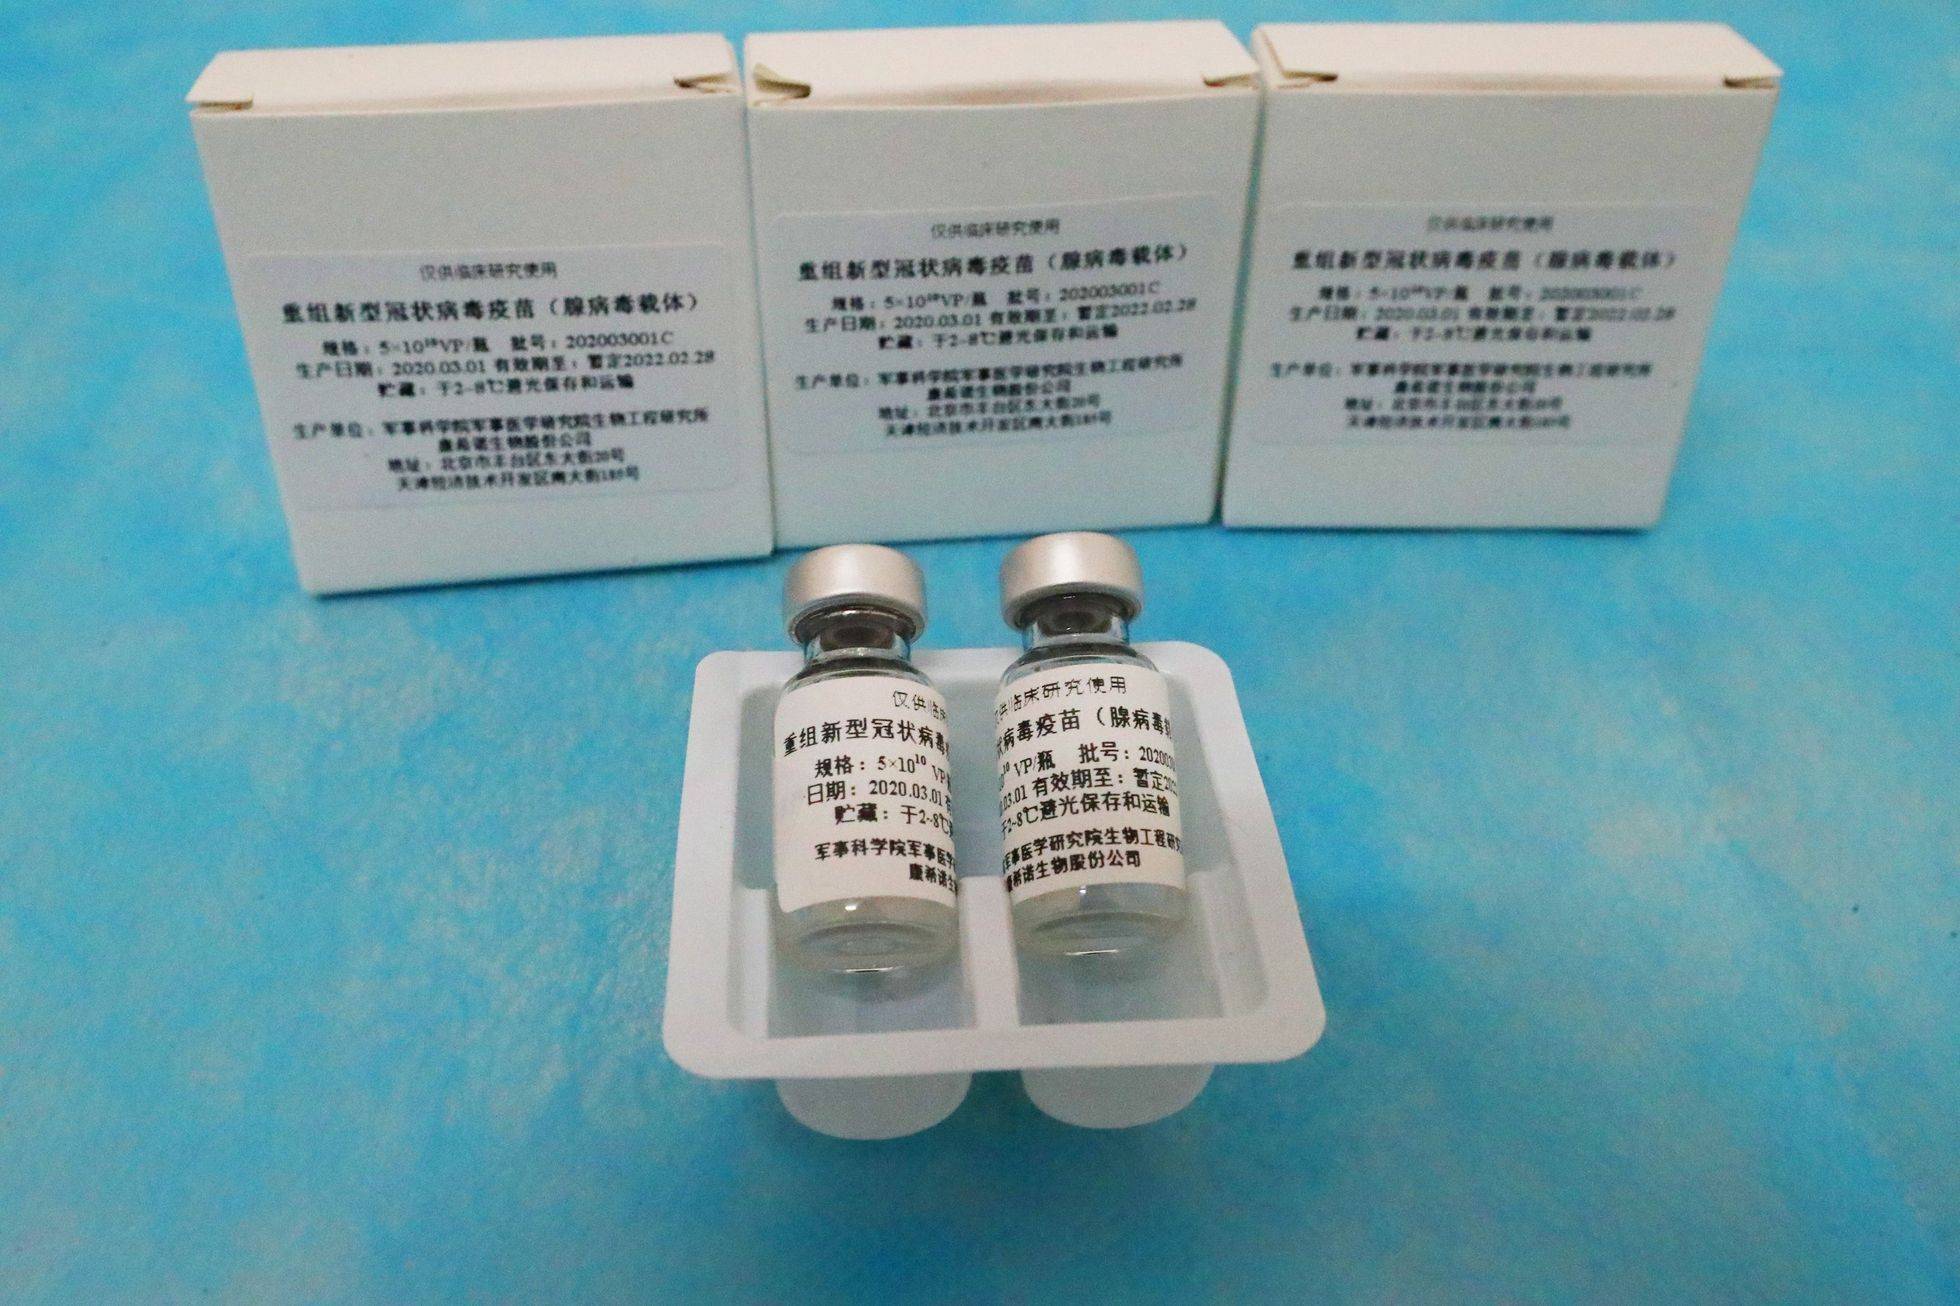 čína vakcína koronavirus cansino